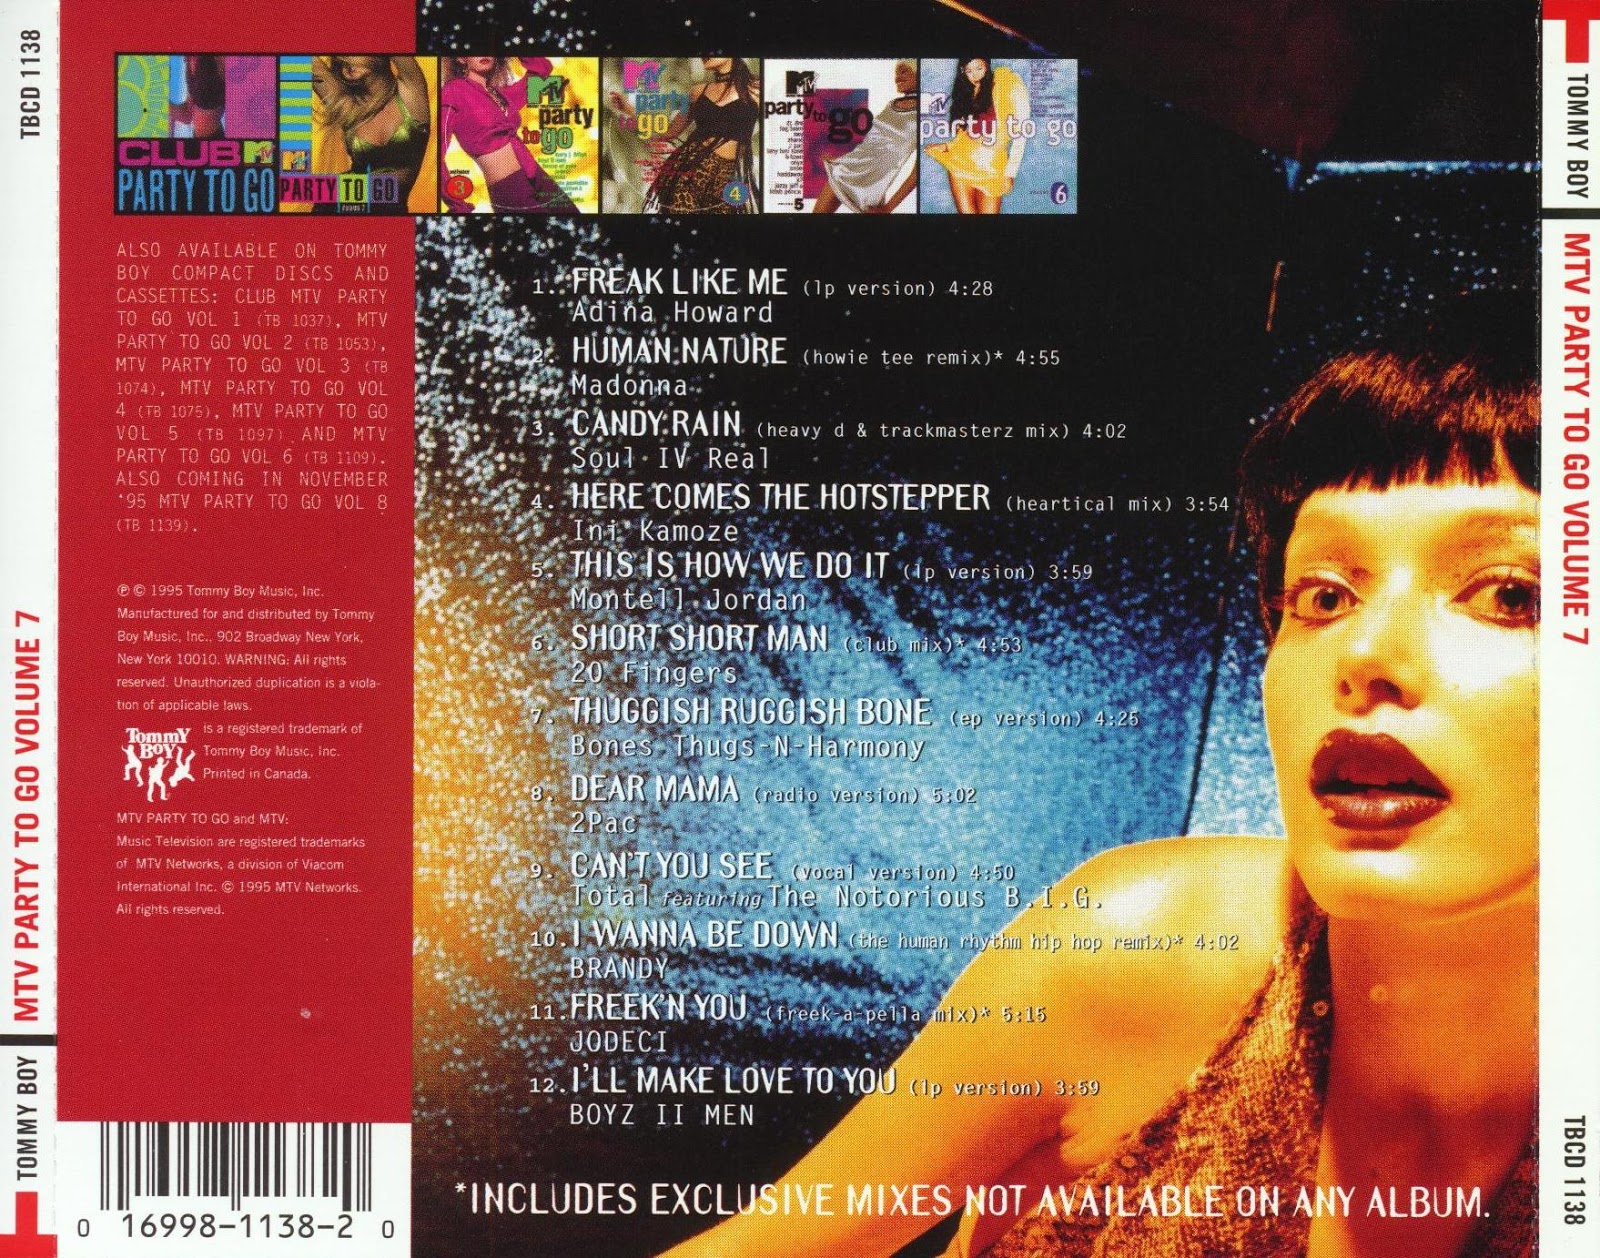 01- Adina Howard - Freak Like Me (LP Version) (4:28) 02- Madonna - Human Na...